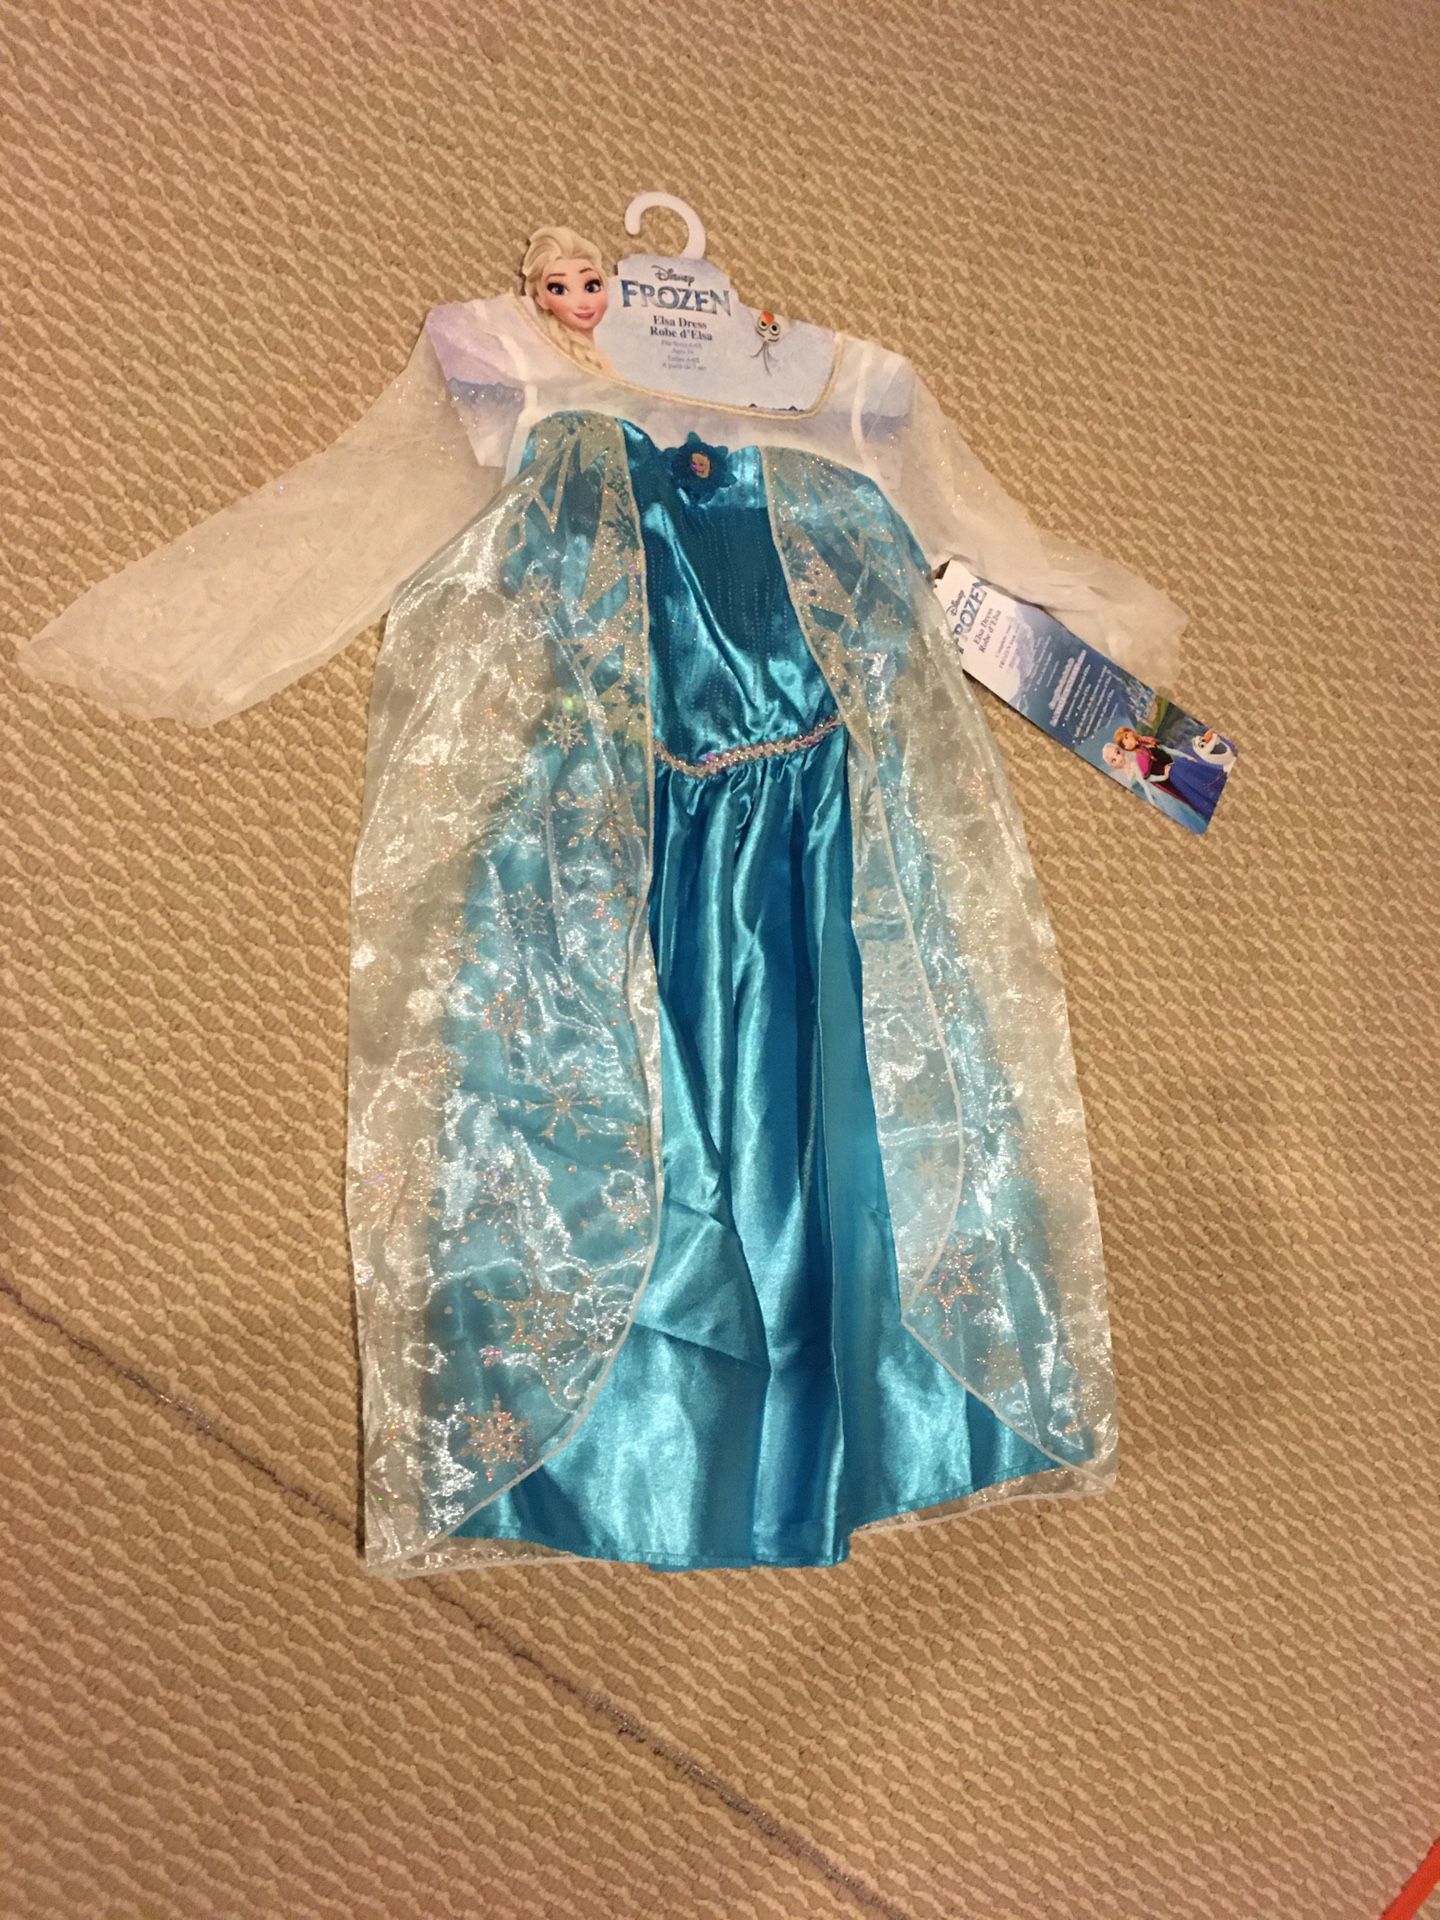 Costume for Halloween (Elsa) (NEW)- 3-4 years